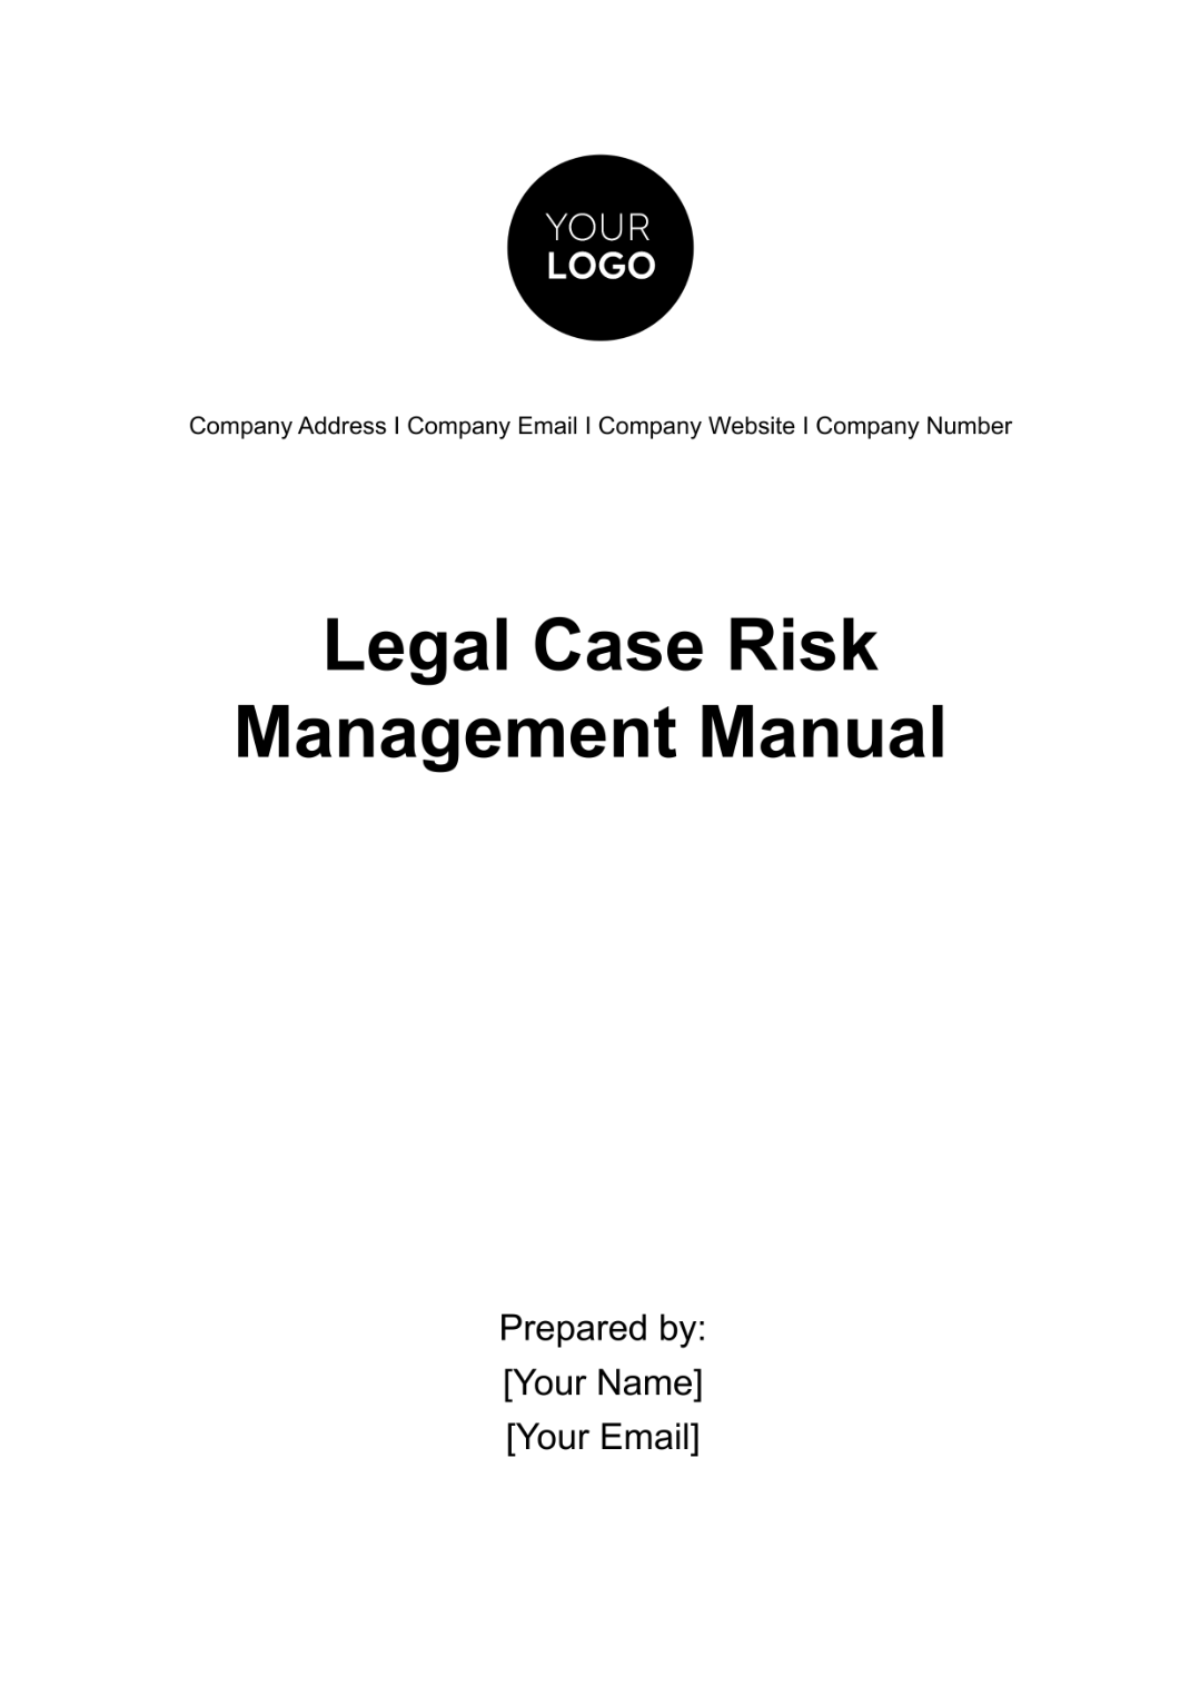 Legal Case Risk Management Manual Template